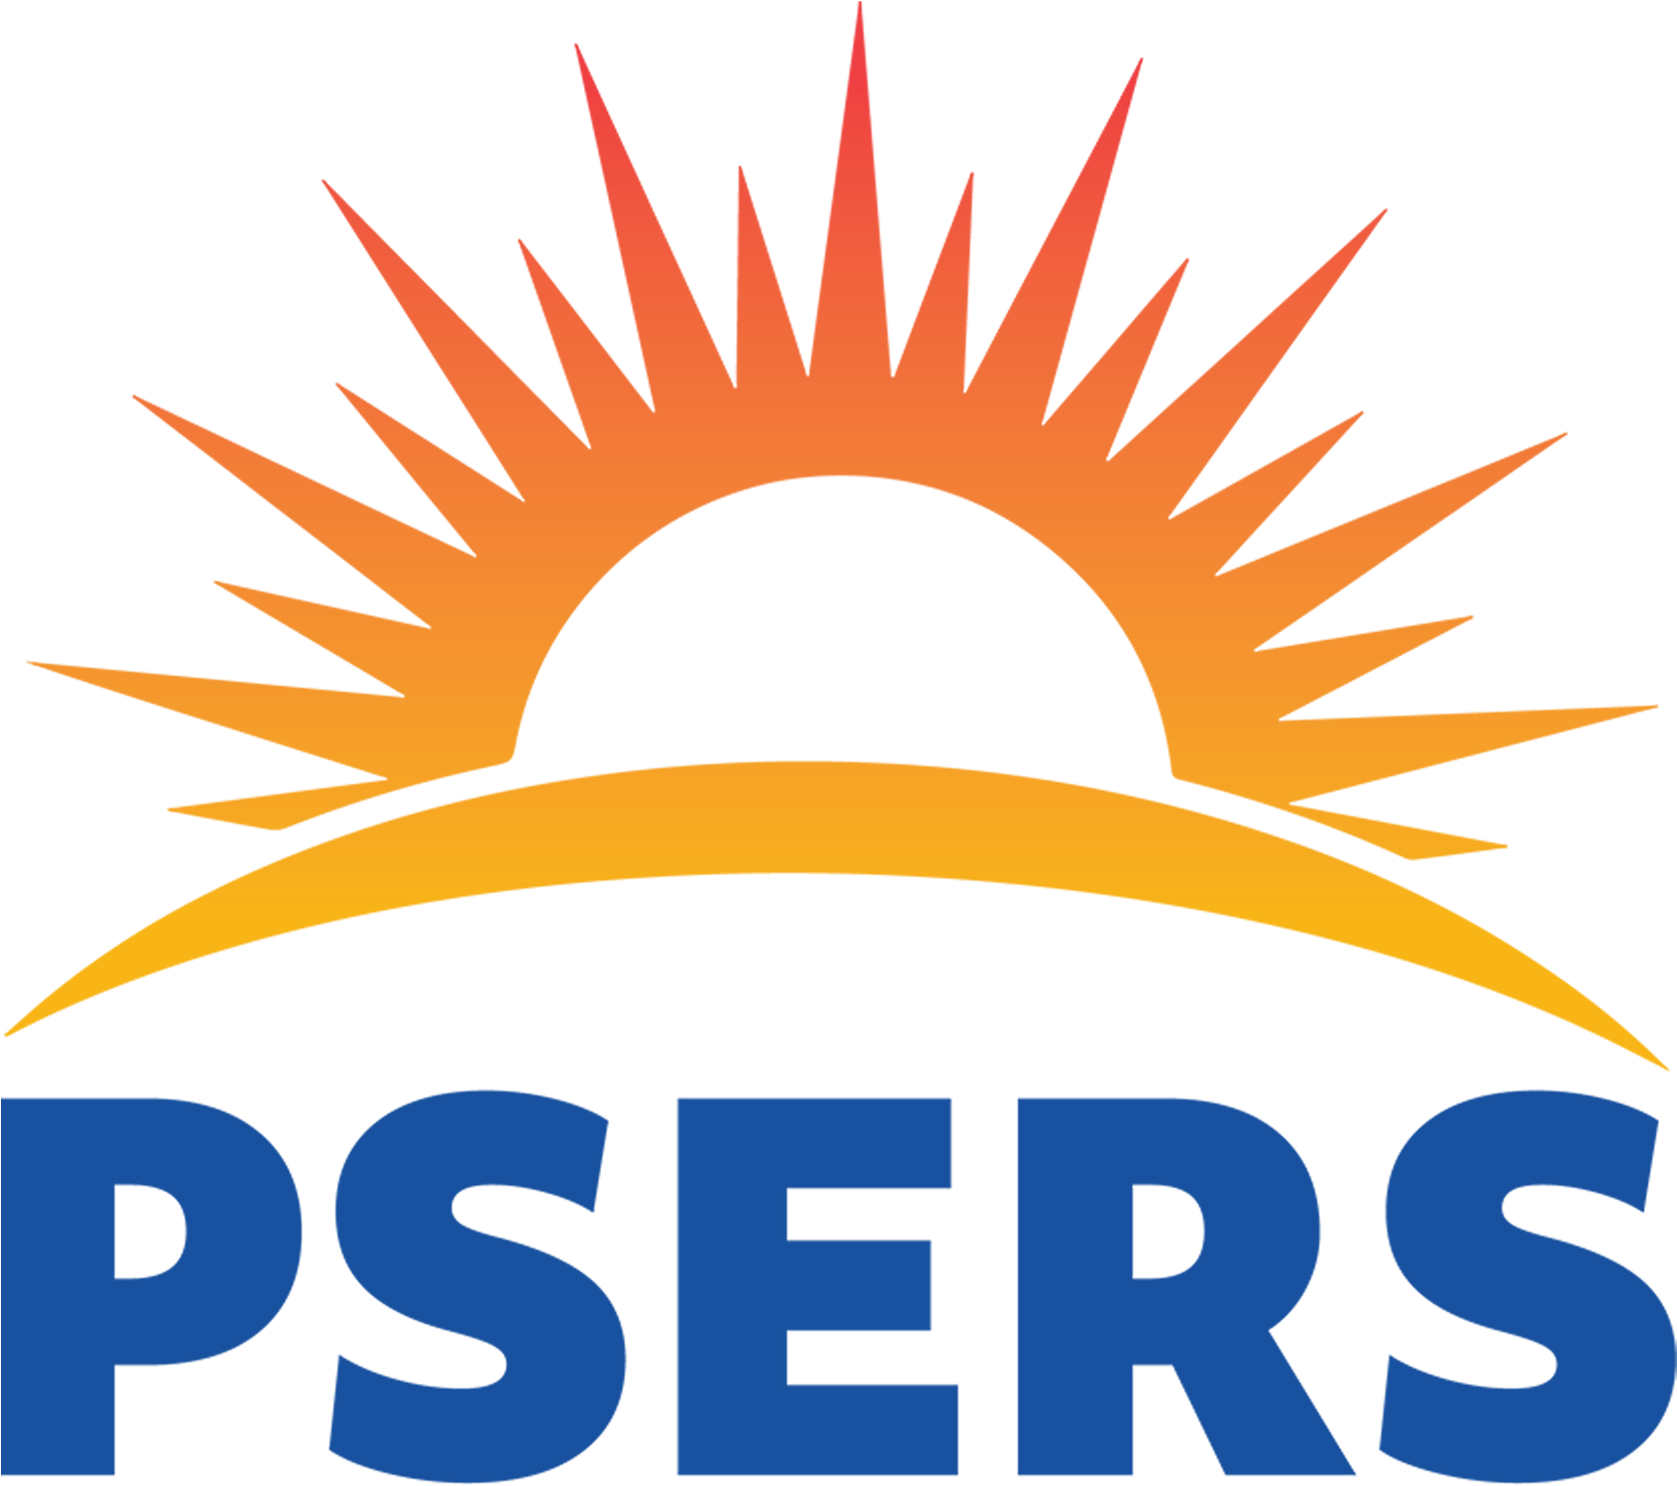 P S E R S Logo Pennsylvania Retirement System PNG